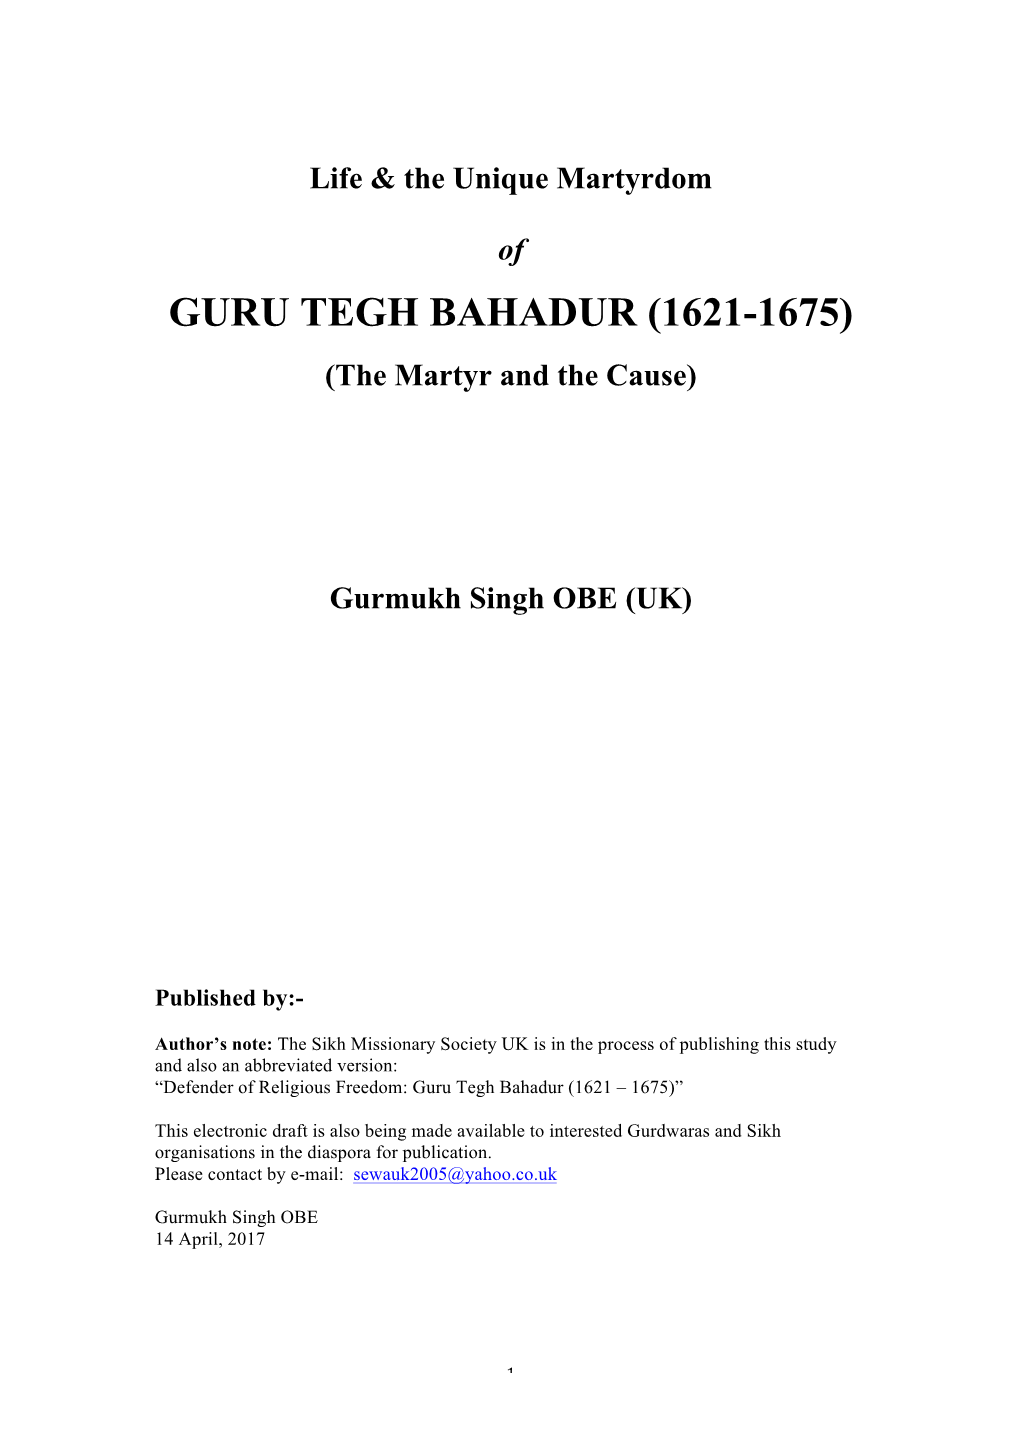 Life & the Unique Martyrdom of Guru Tegh Bahadur